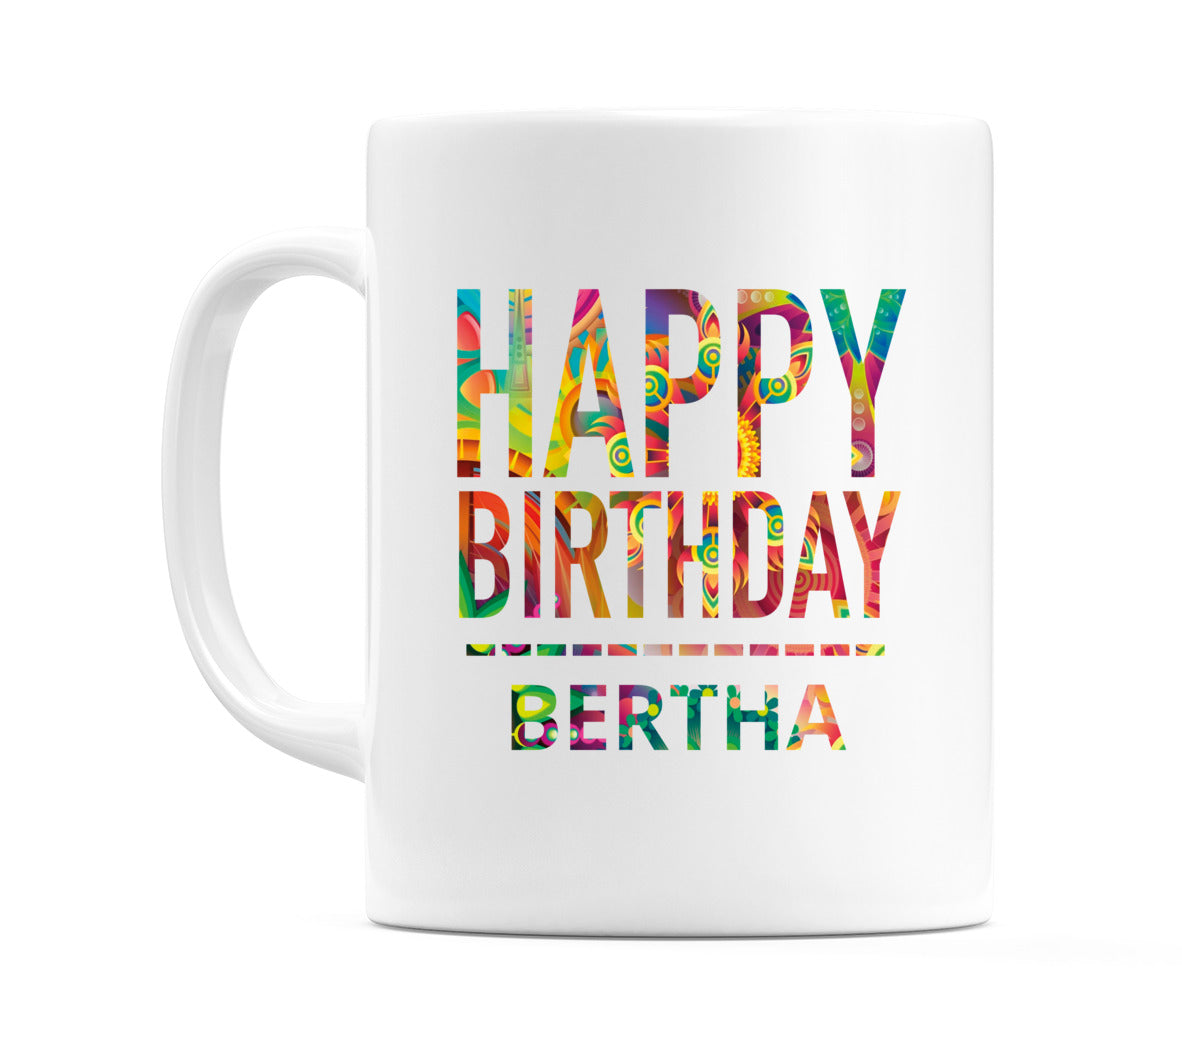 Happy Birthday Bertha (Tie Dye Effect) Mug Cup by WeDoMugs